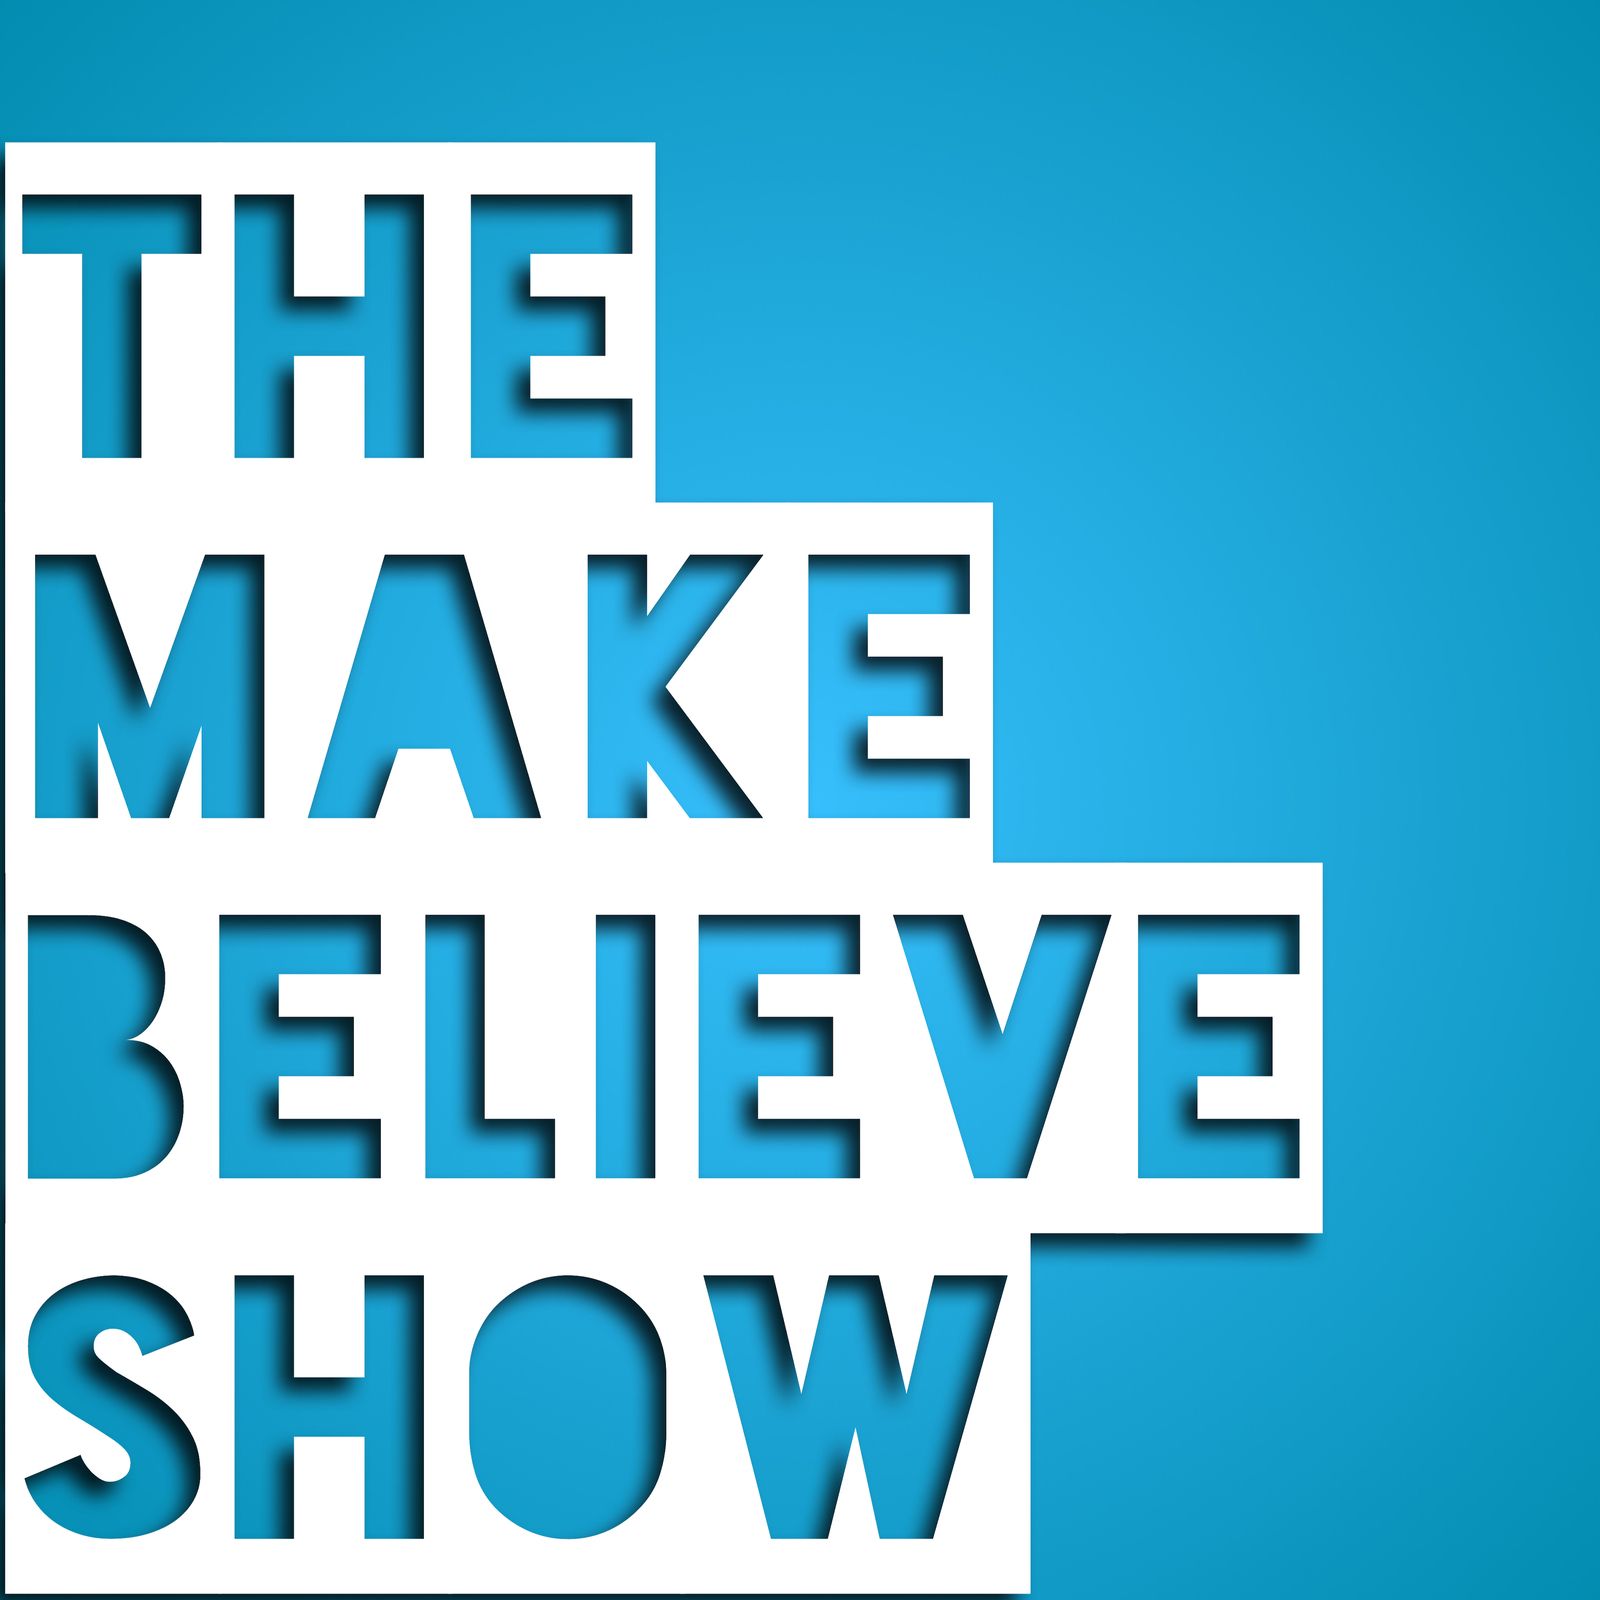 Make believe. Make-believing. Шоу Трумана подкаст. Make you make believe. Believe do make